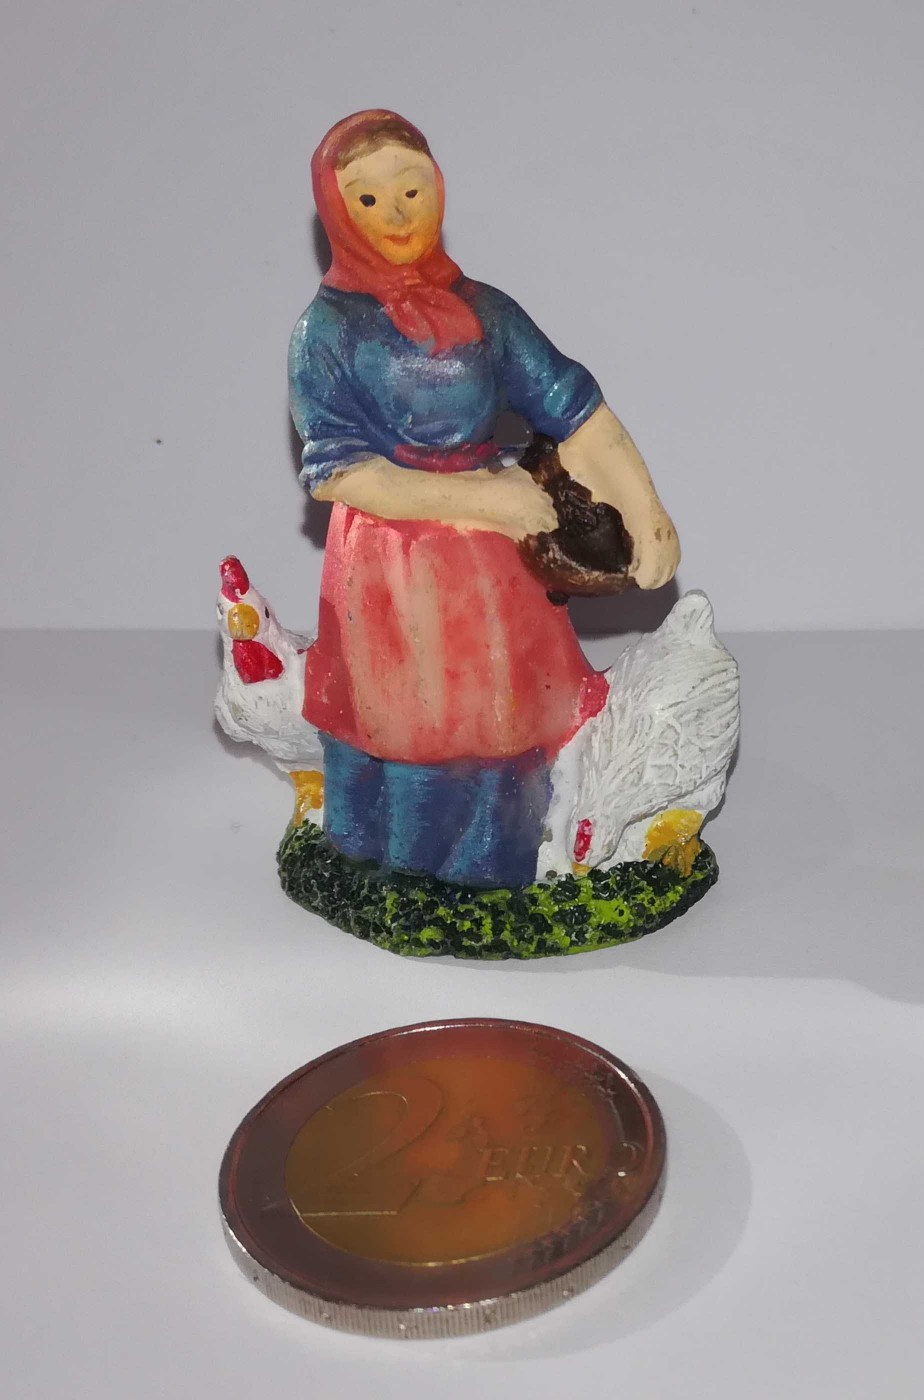 Figurina Presepe in plastica (cm 5,5) mendicante